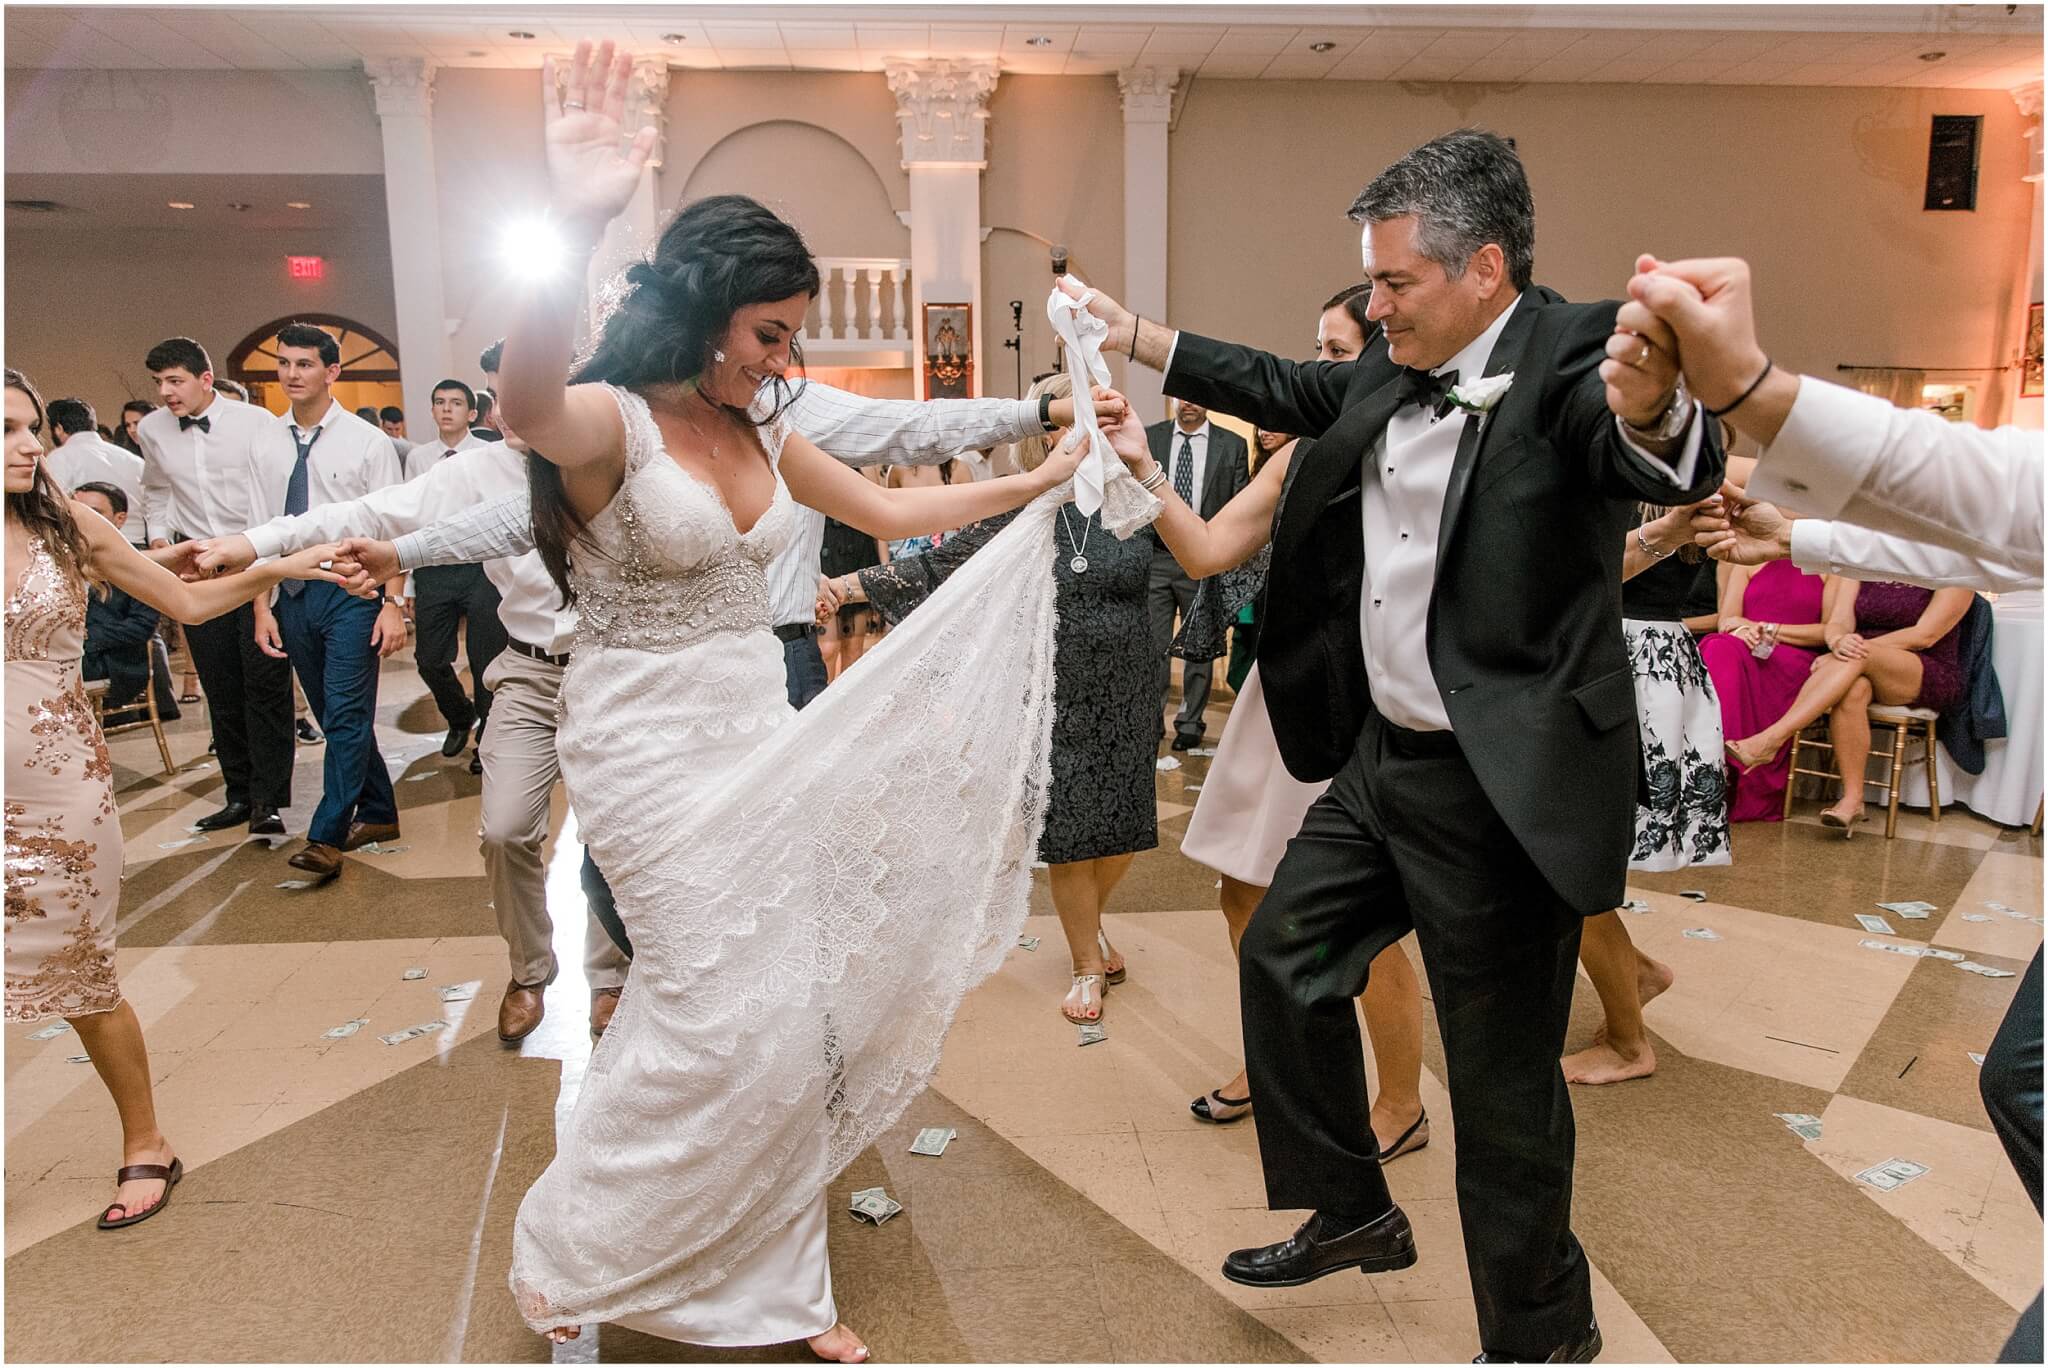 Bright dancing with dad at Greek wedding reception